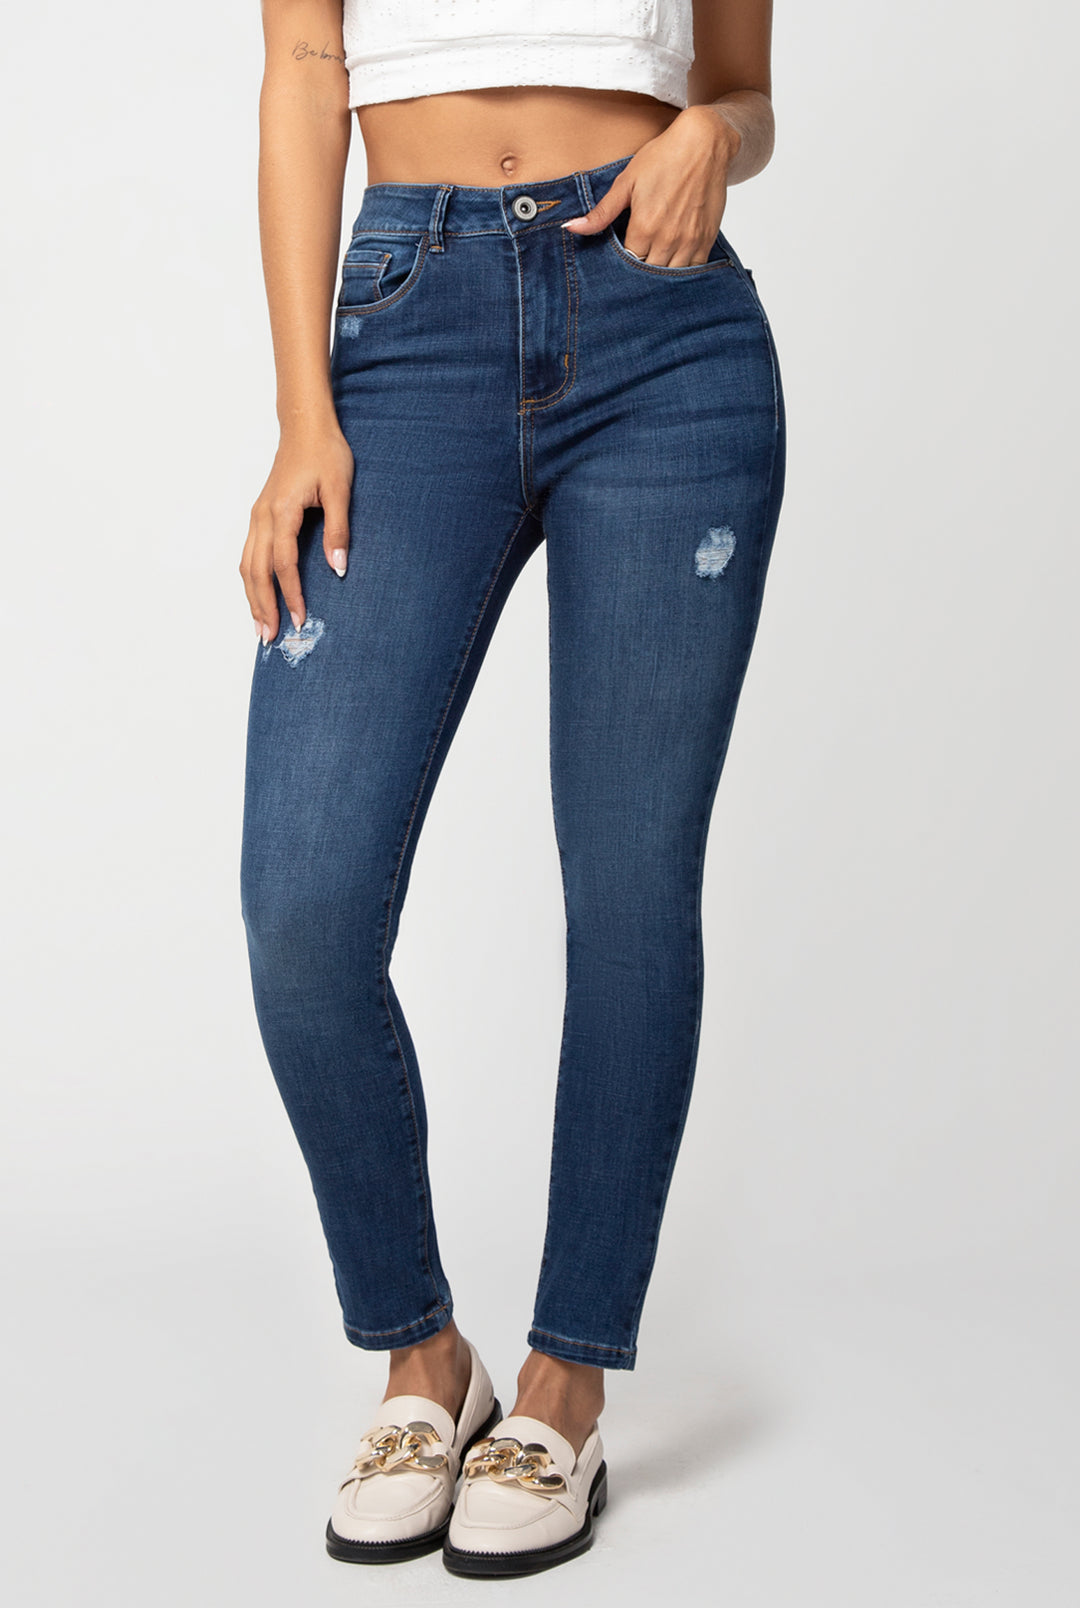 "jeans talla plus" "jeans para mujer tiro alto" "jeans plus size colombia" "jeans levanta cola control abdomen"